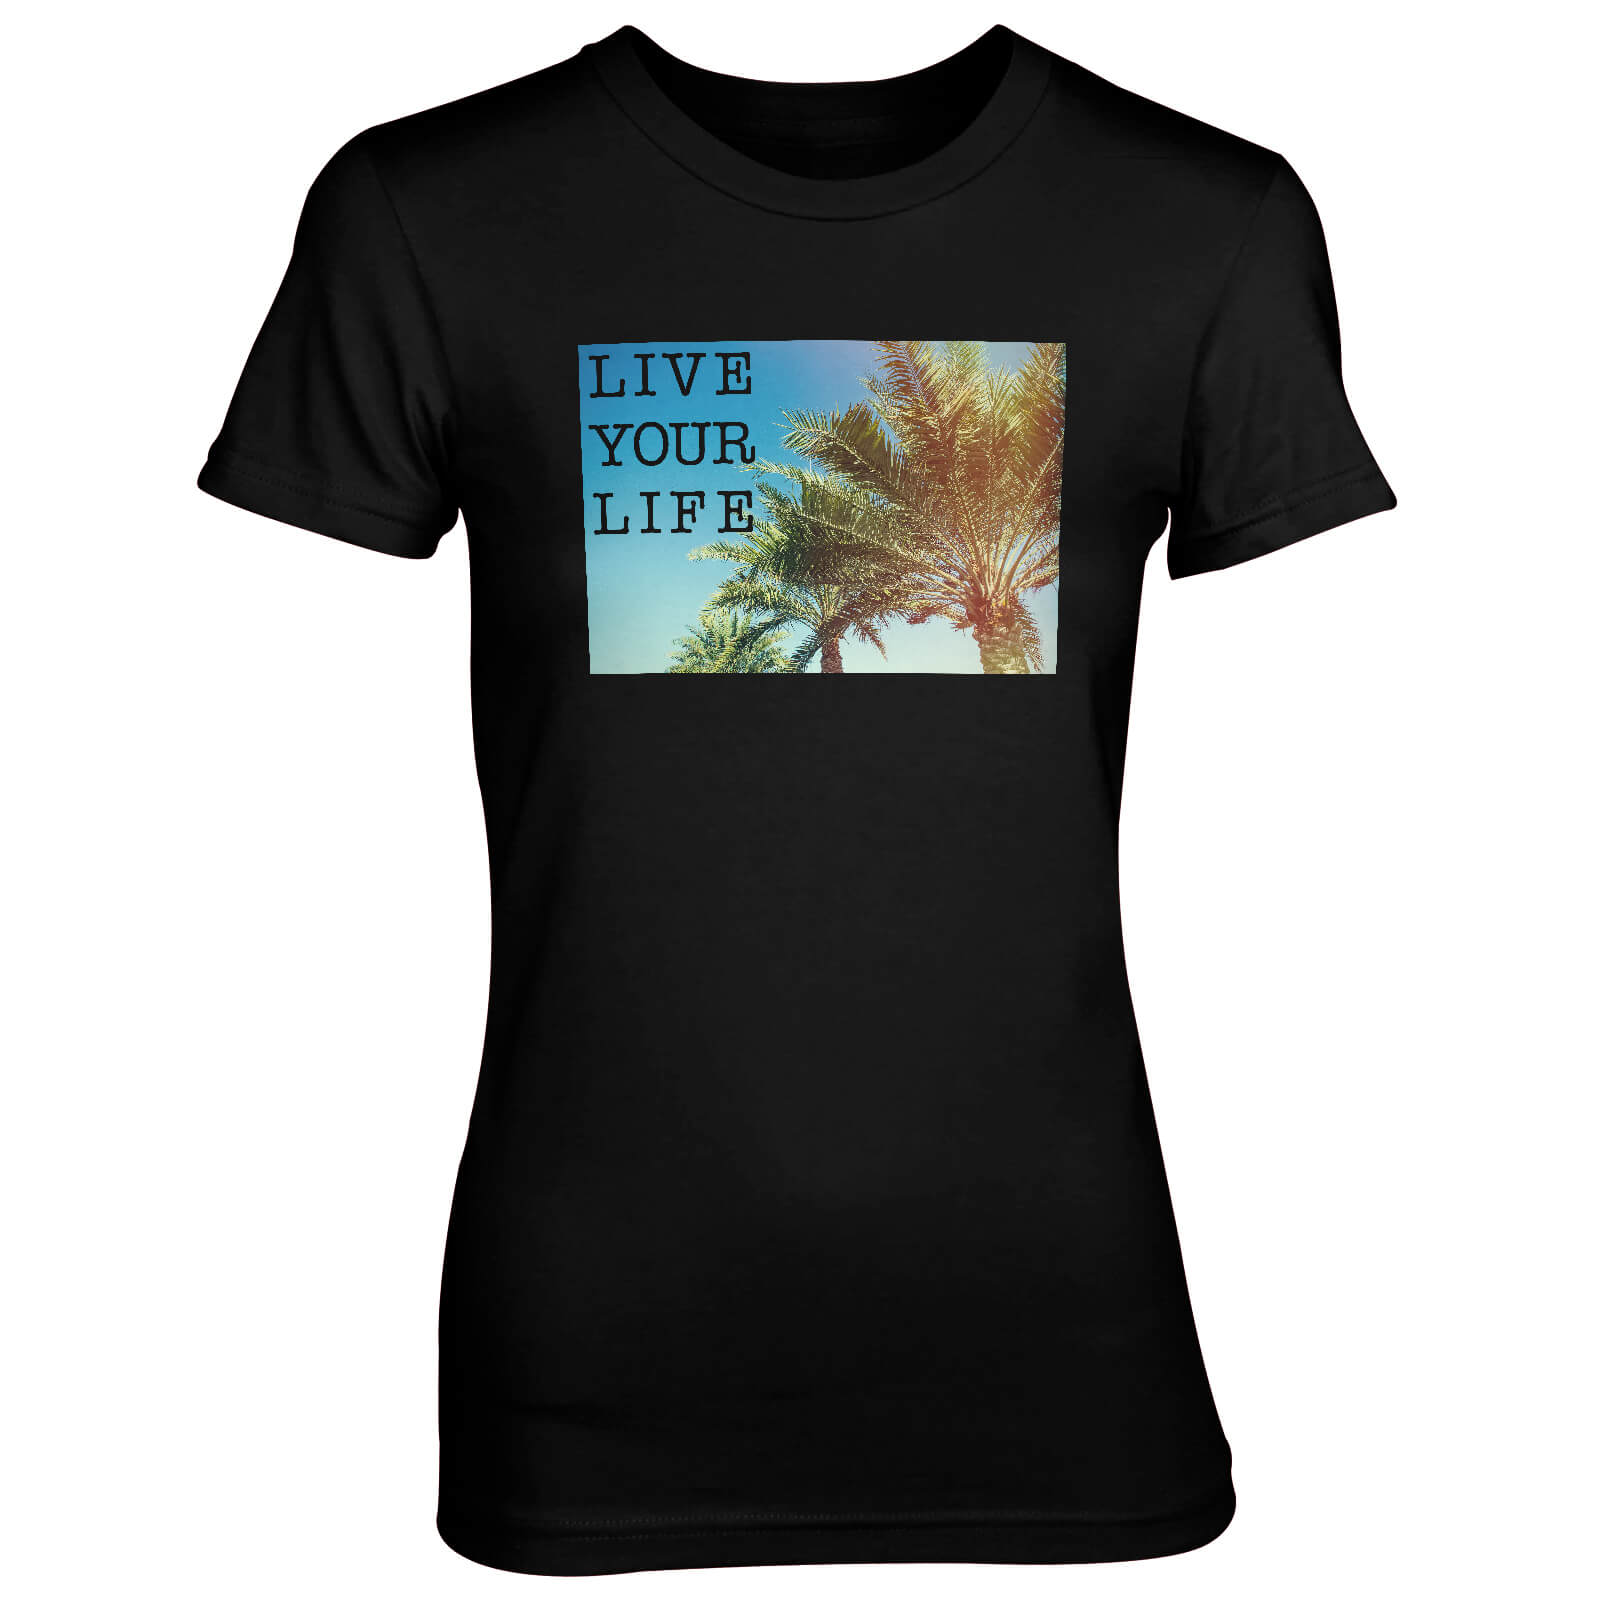 Live Your Life Women's Black T-Shirt - S - Black